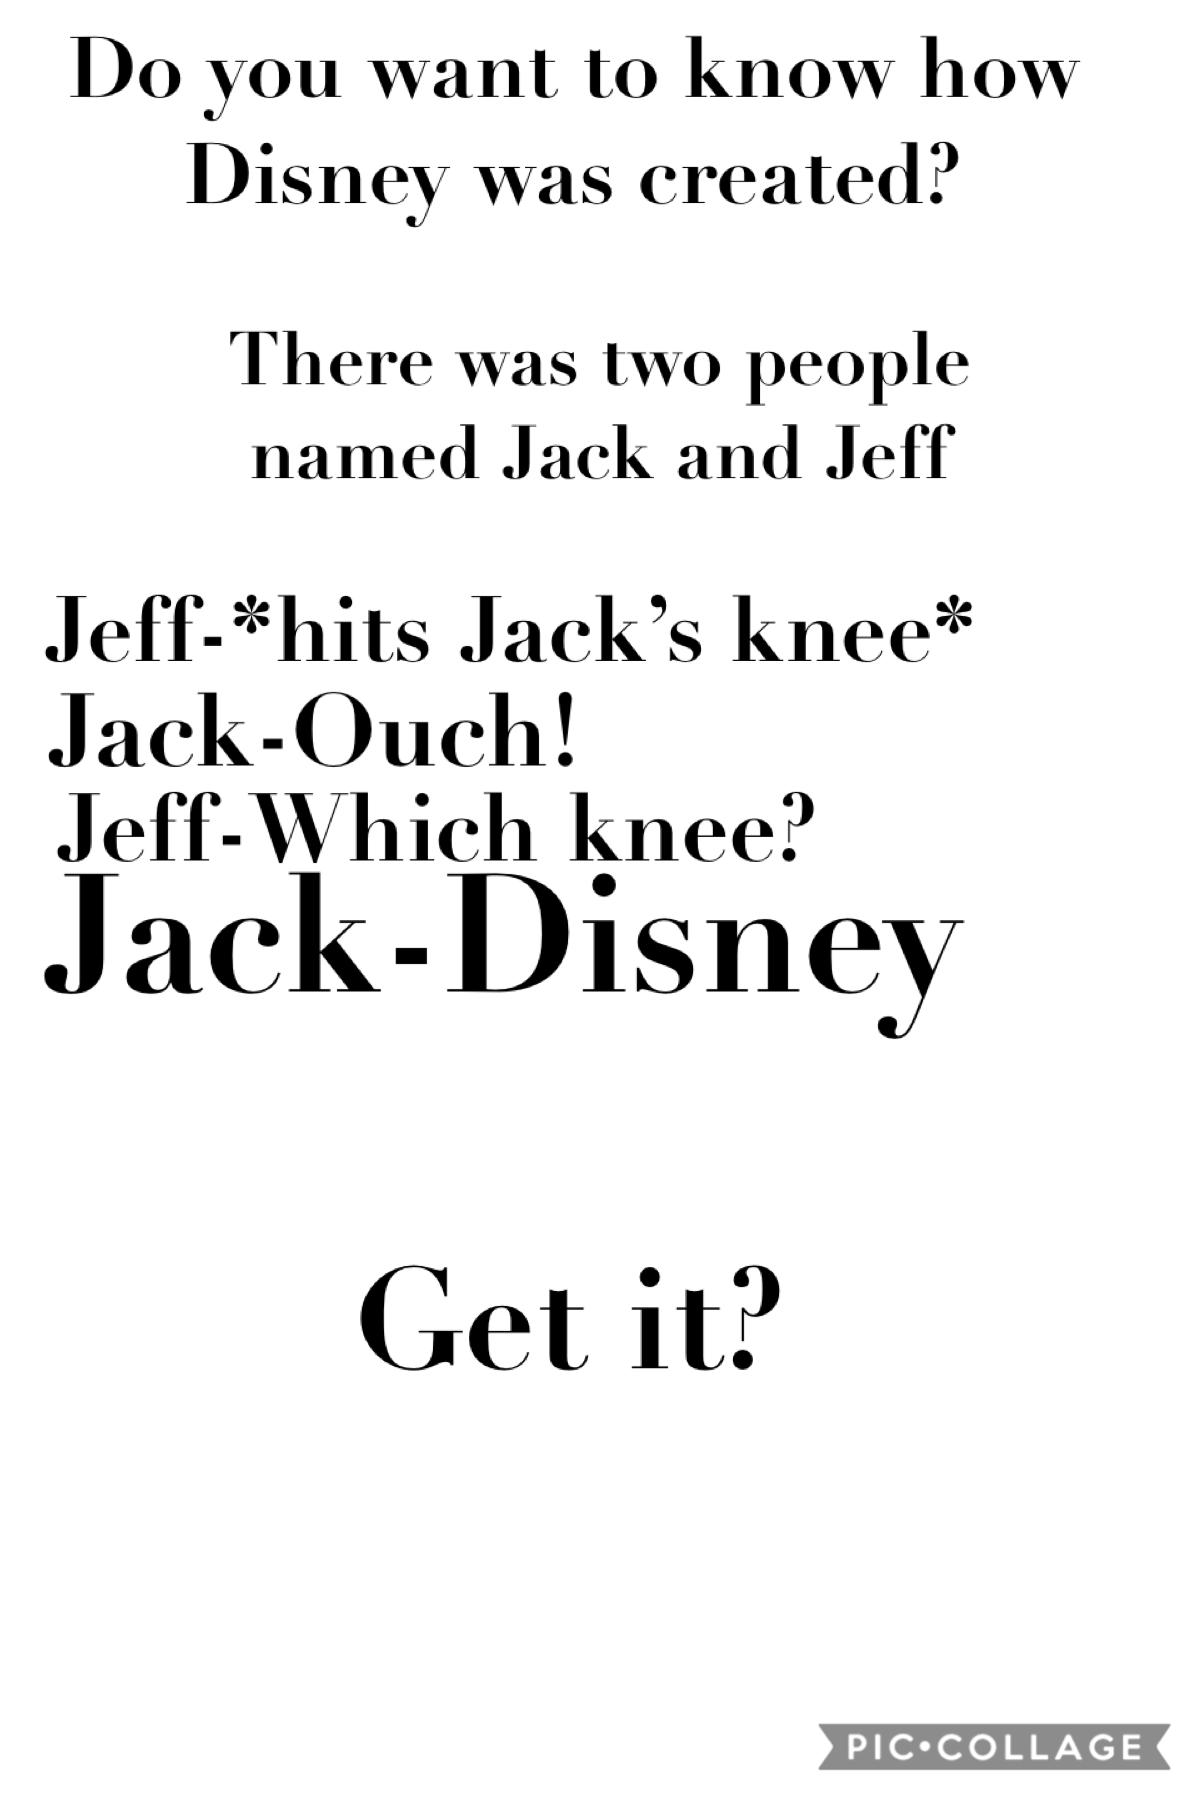 Disney aka This knee. Now get it?